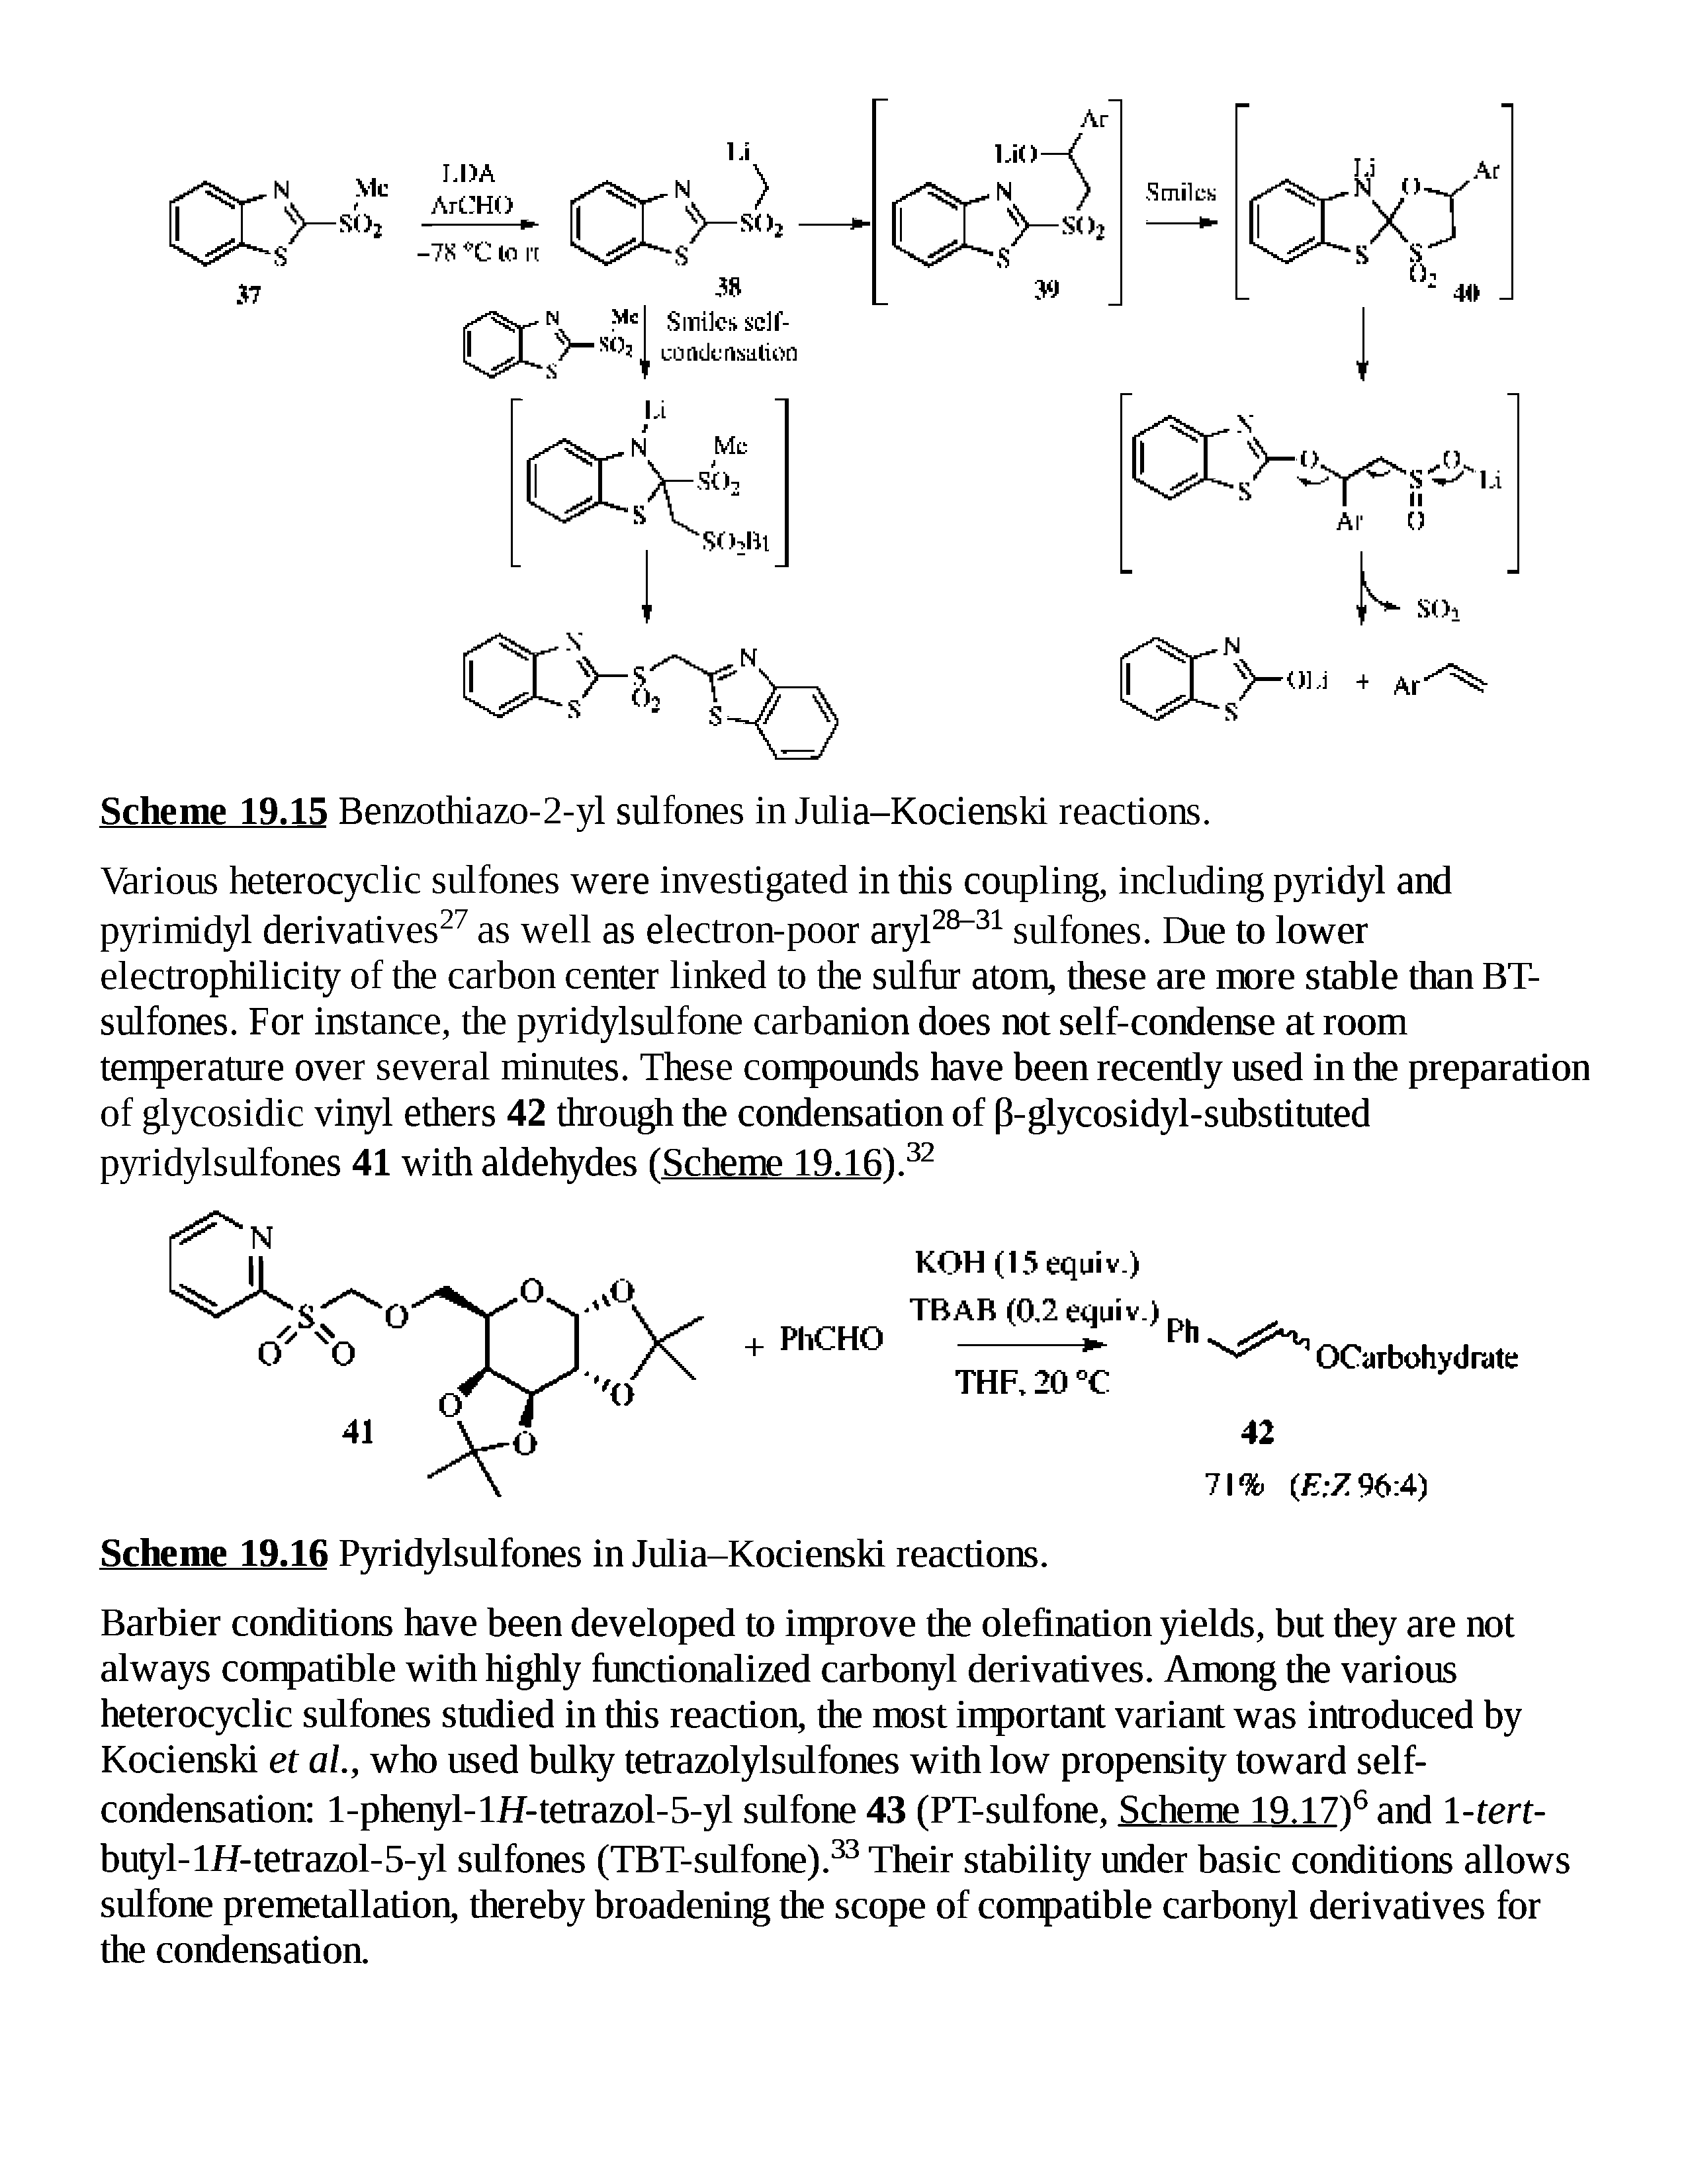 Scheme 19.15 Benzothiazo-2-yl sulfones in Julia-Kocienski reactions.